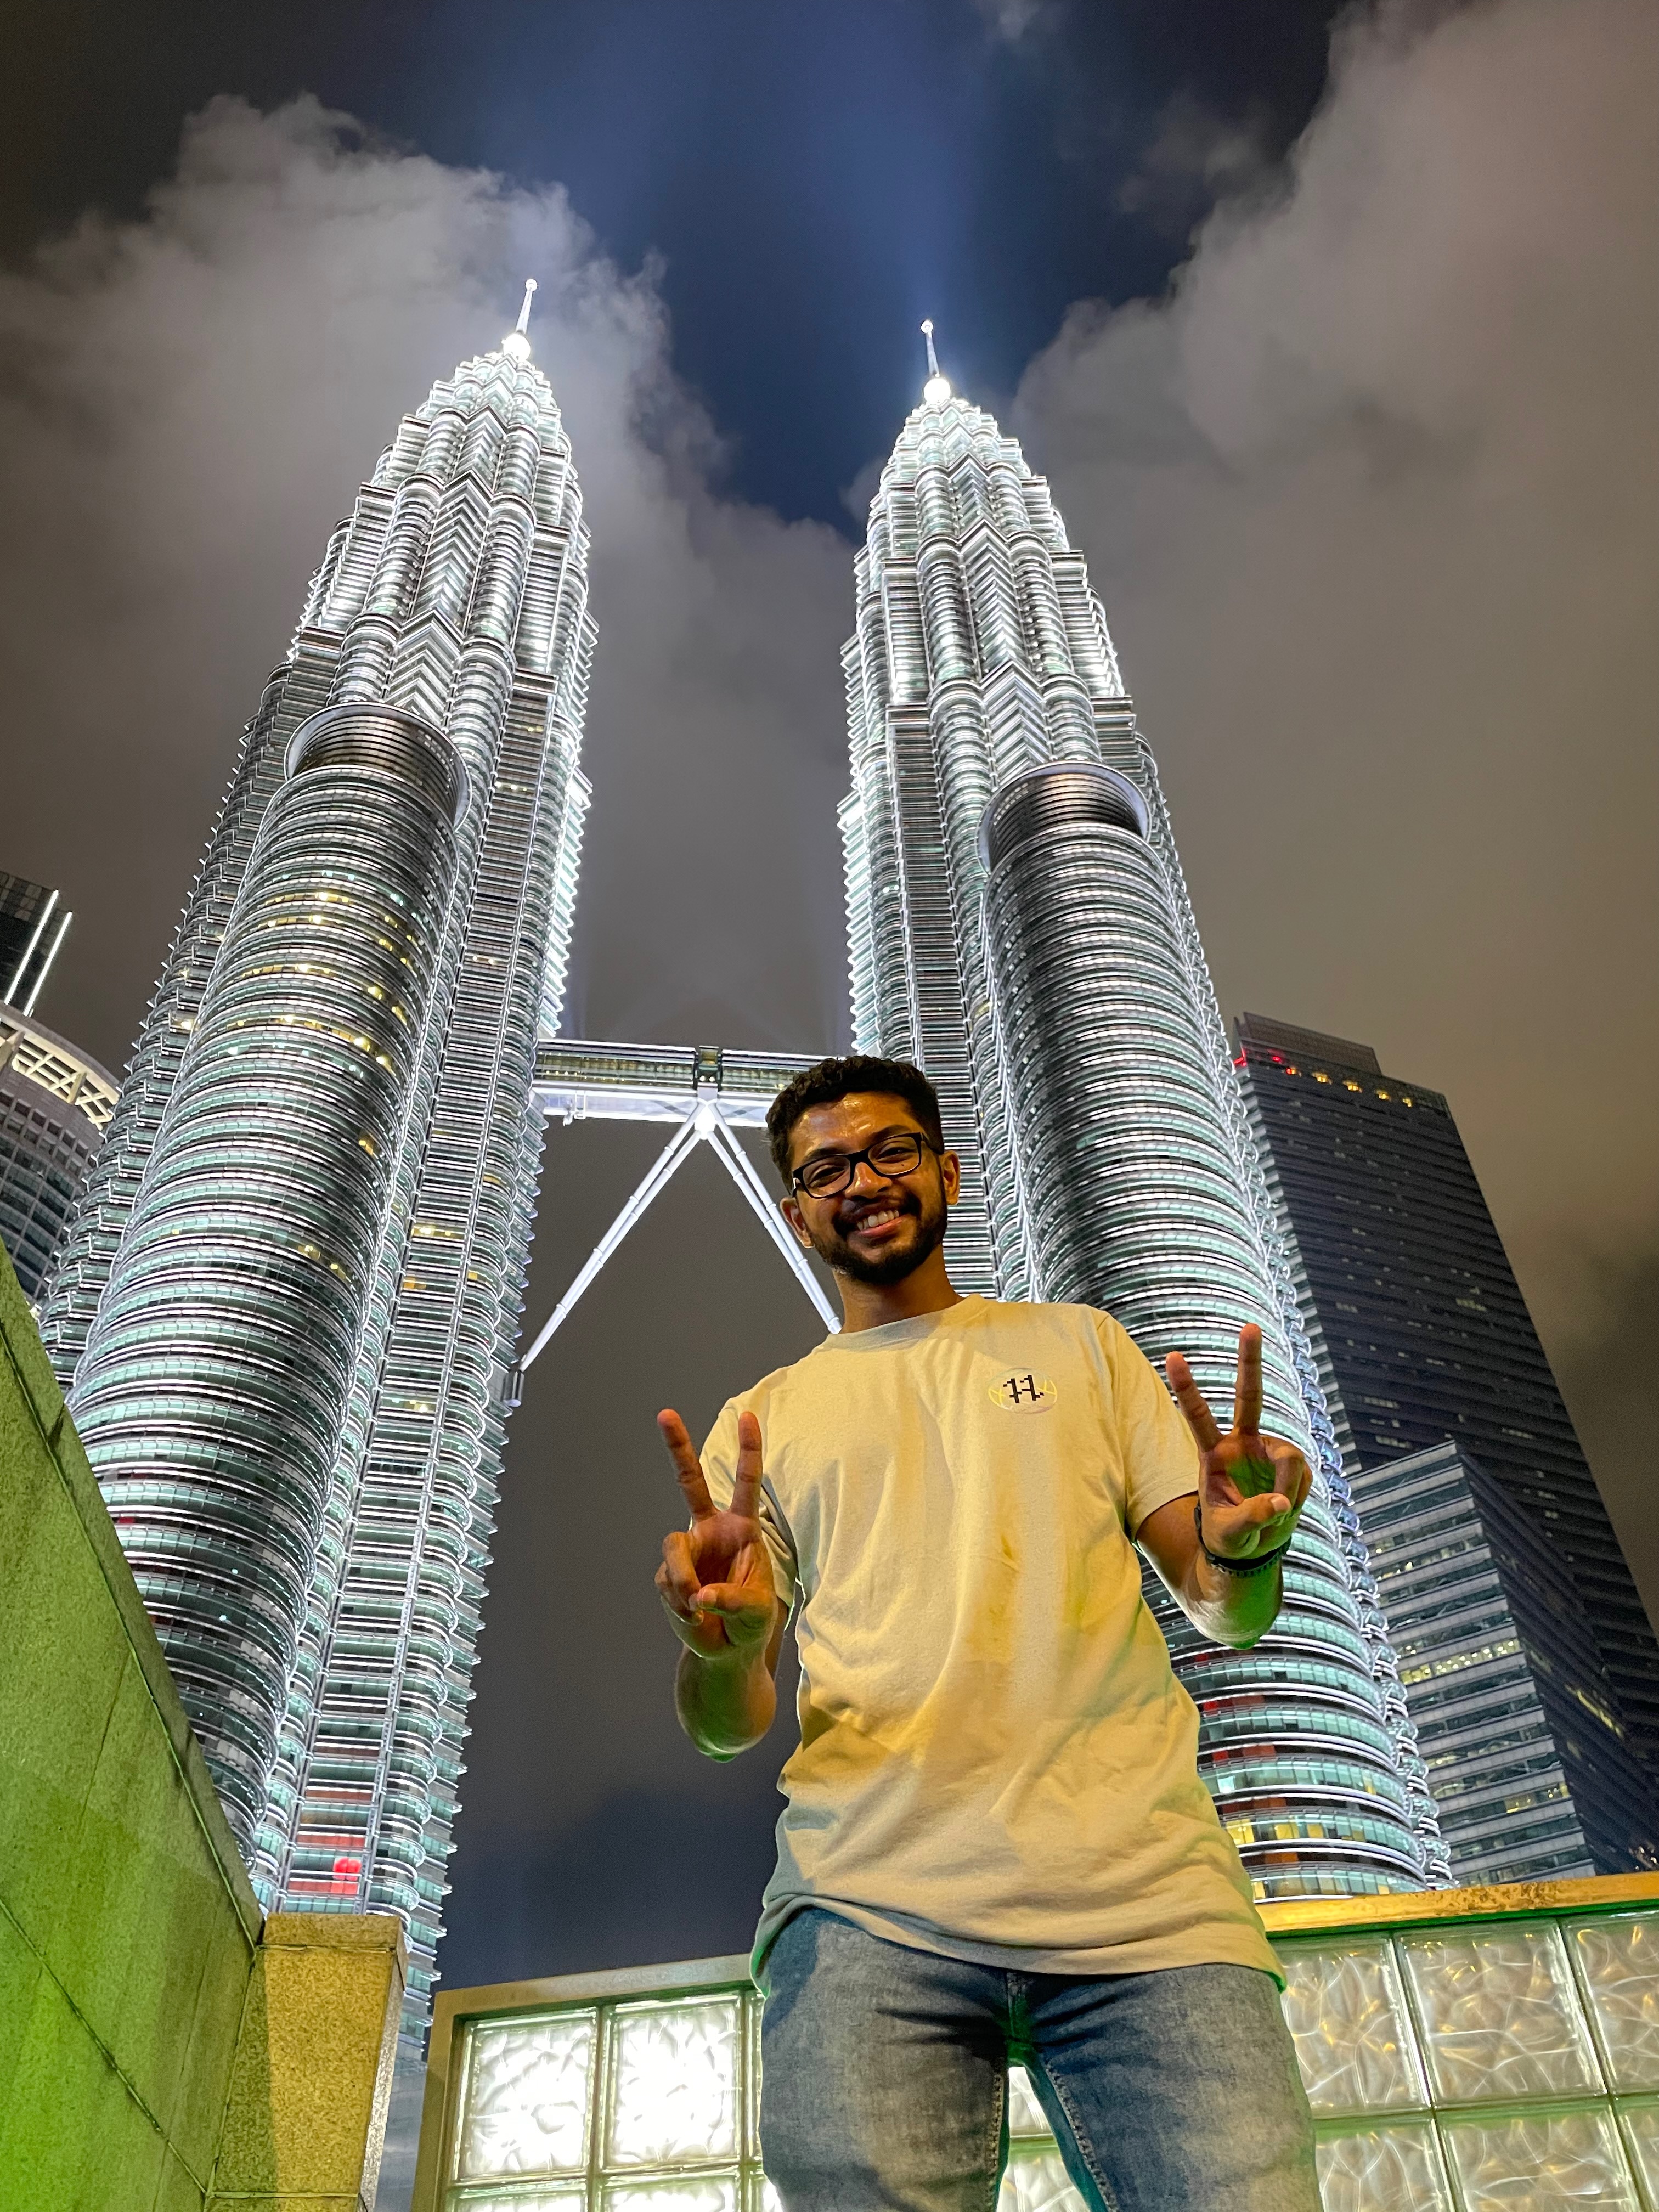 The Petronas Twin Towers